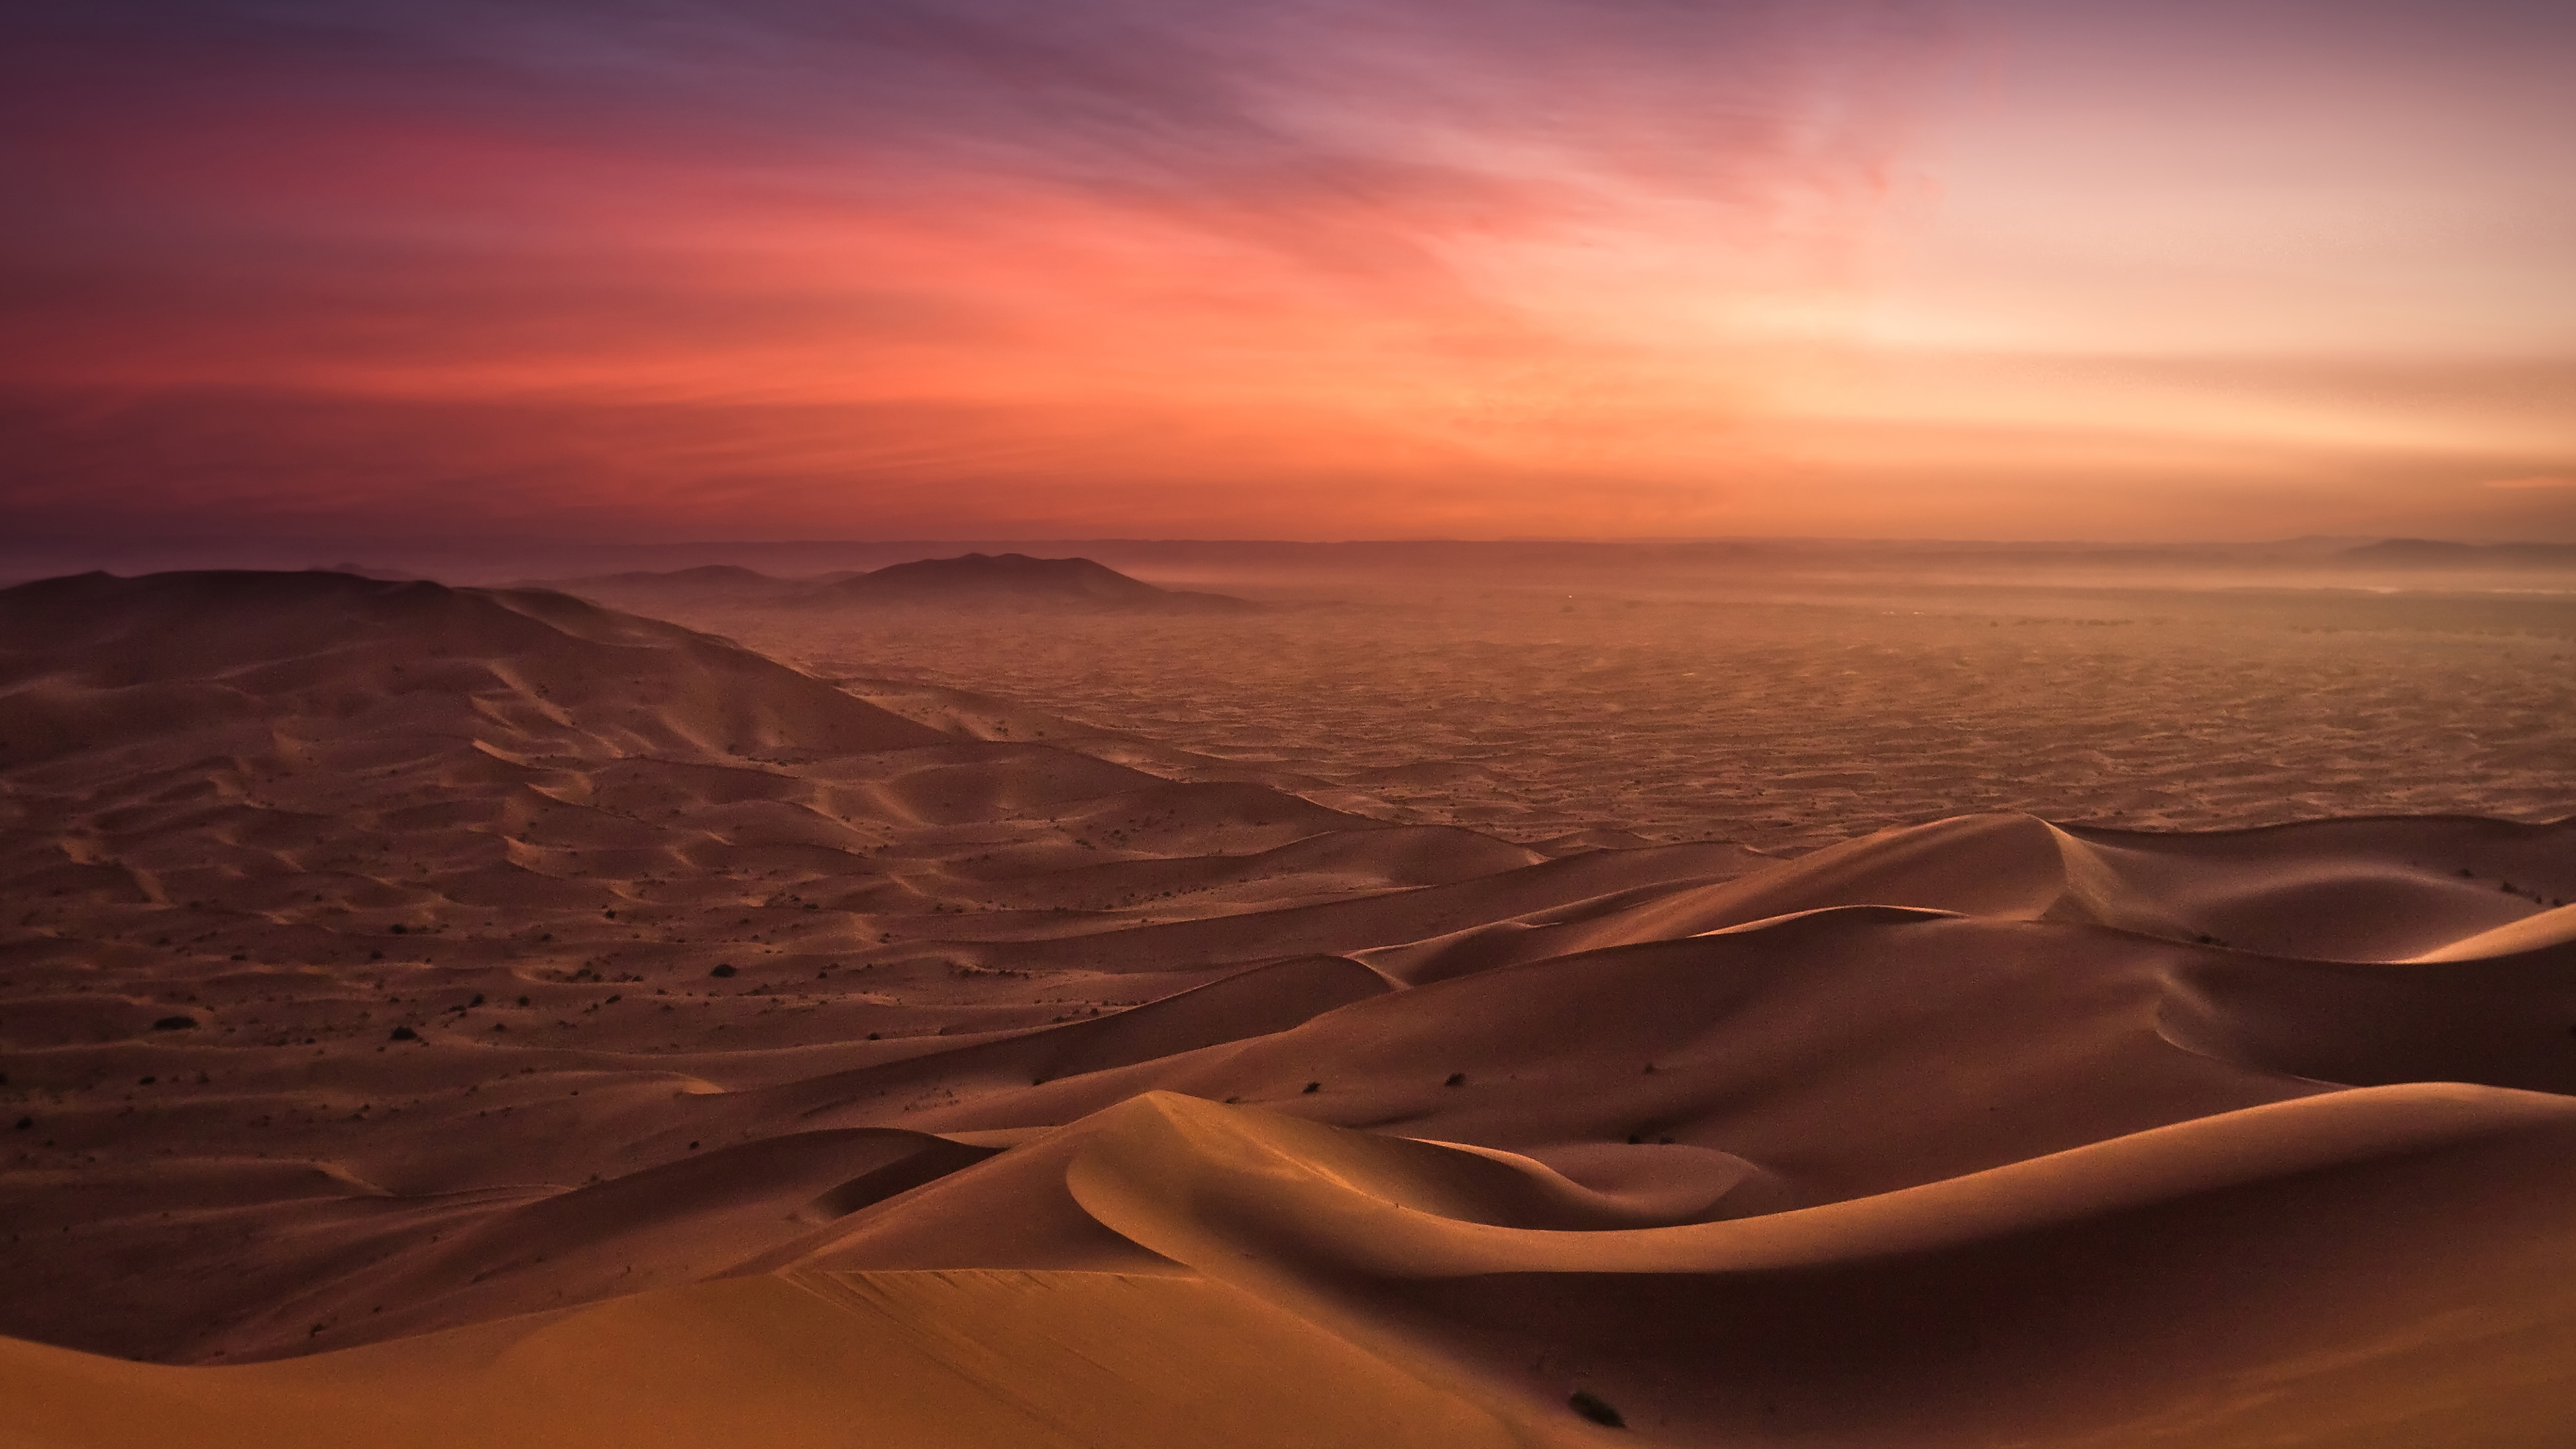 666882 descargar imagen tierra/naturaleza, desierto, duna, horizonte, marruecos, arena, atardecer: fondos de pantalla y protectores de pantalla gratis